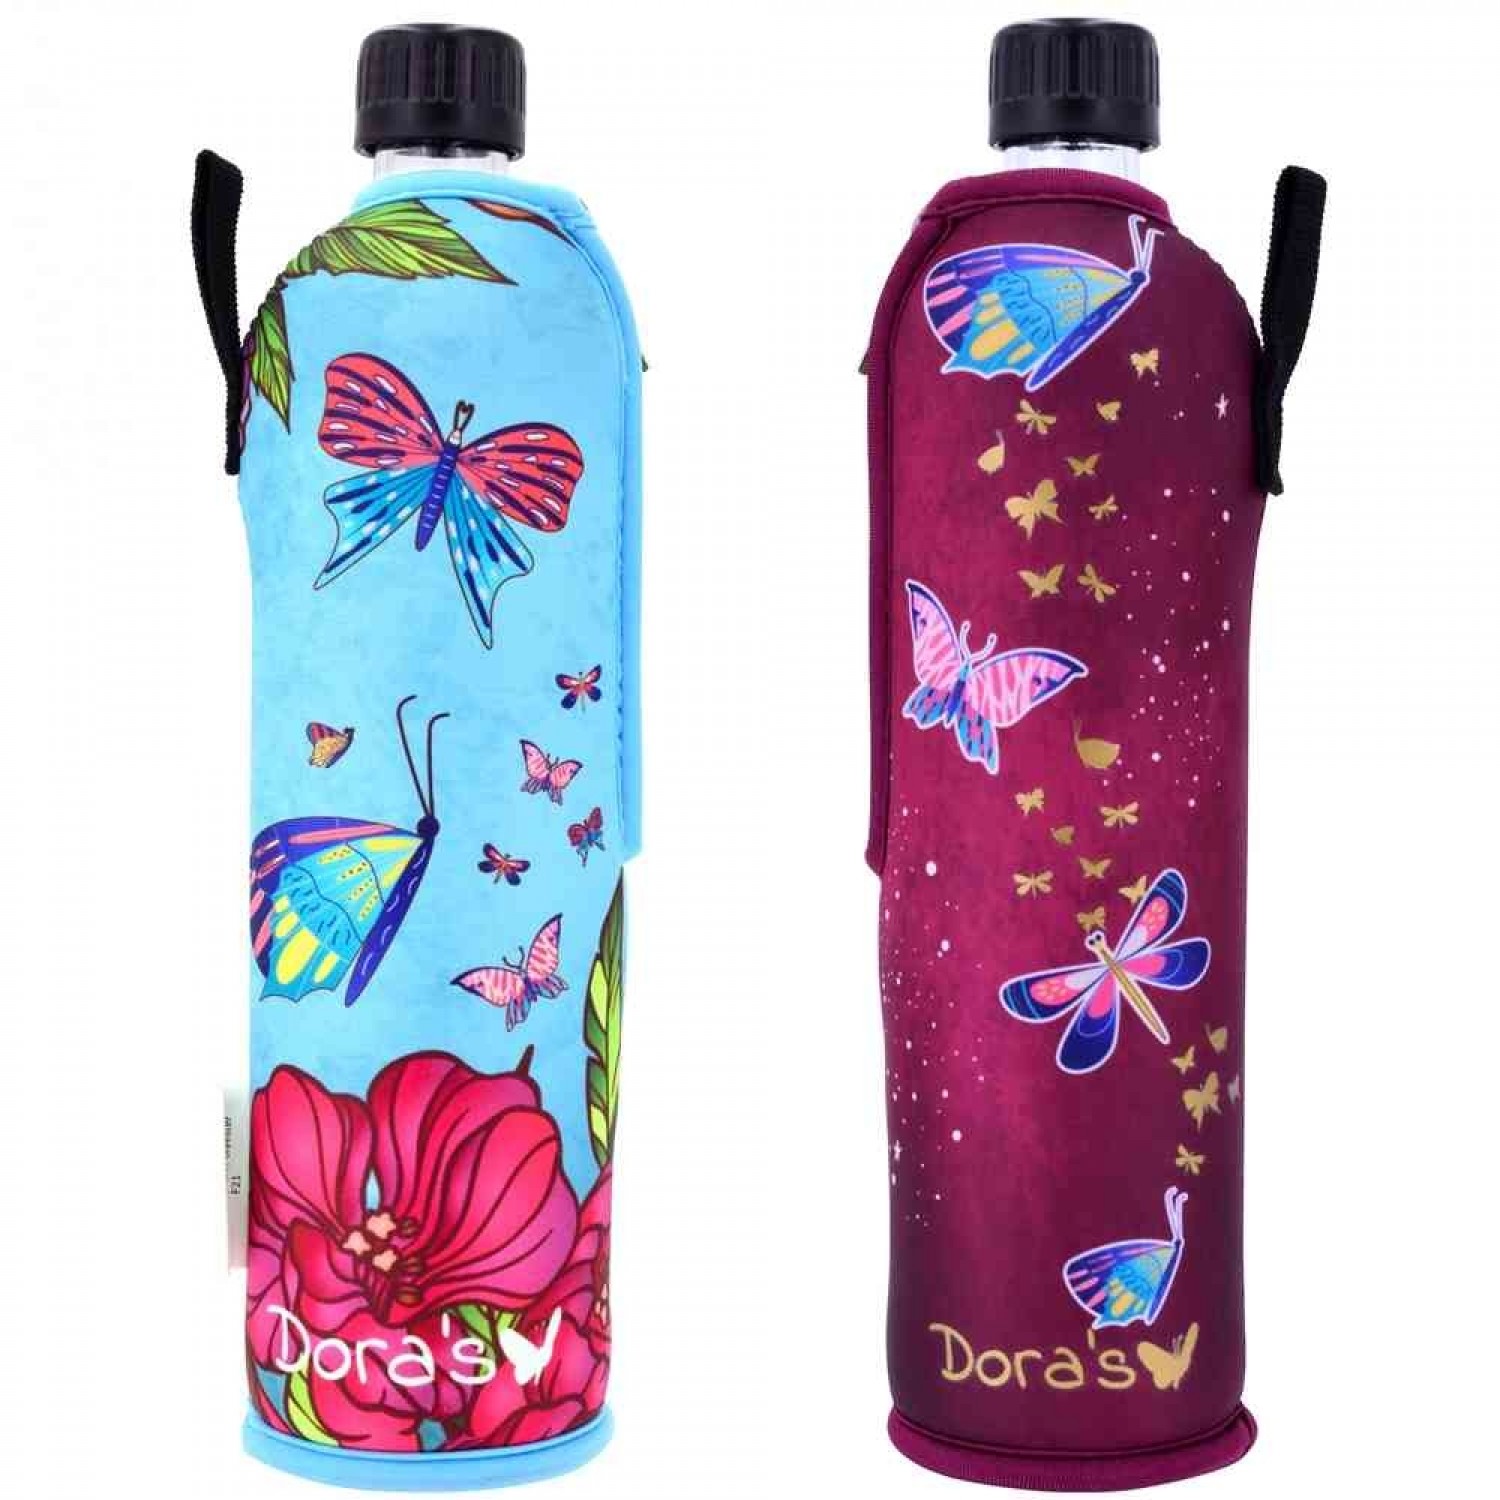 Dora’s Drinking Bottle & Butterfly Neoprene Sleeve